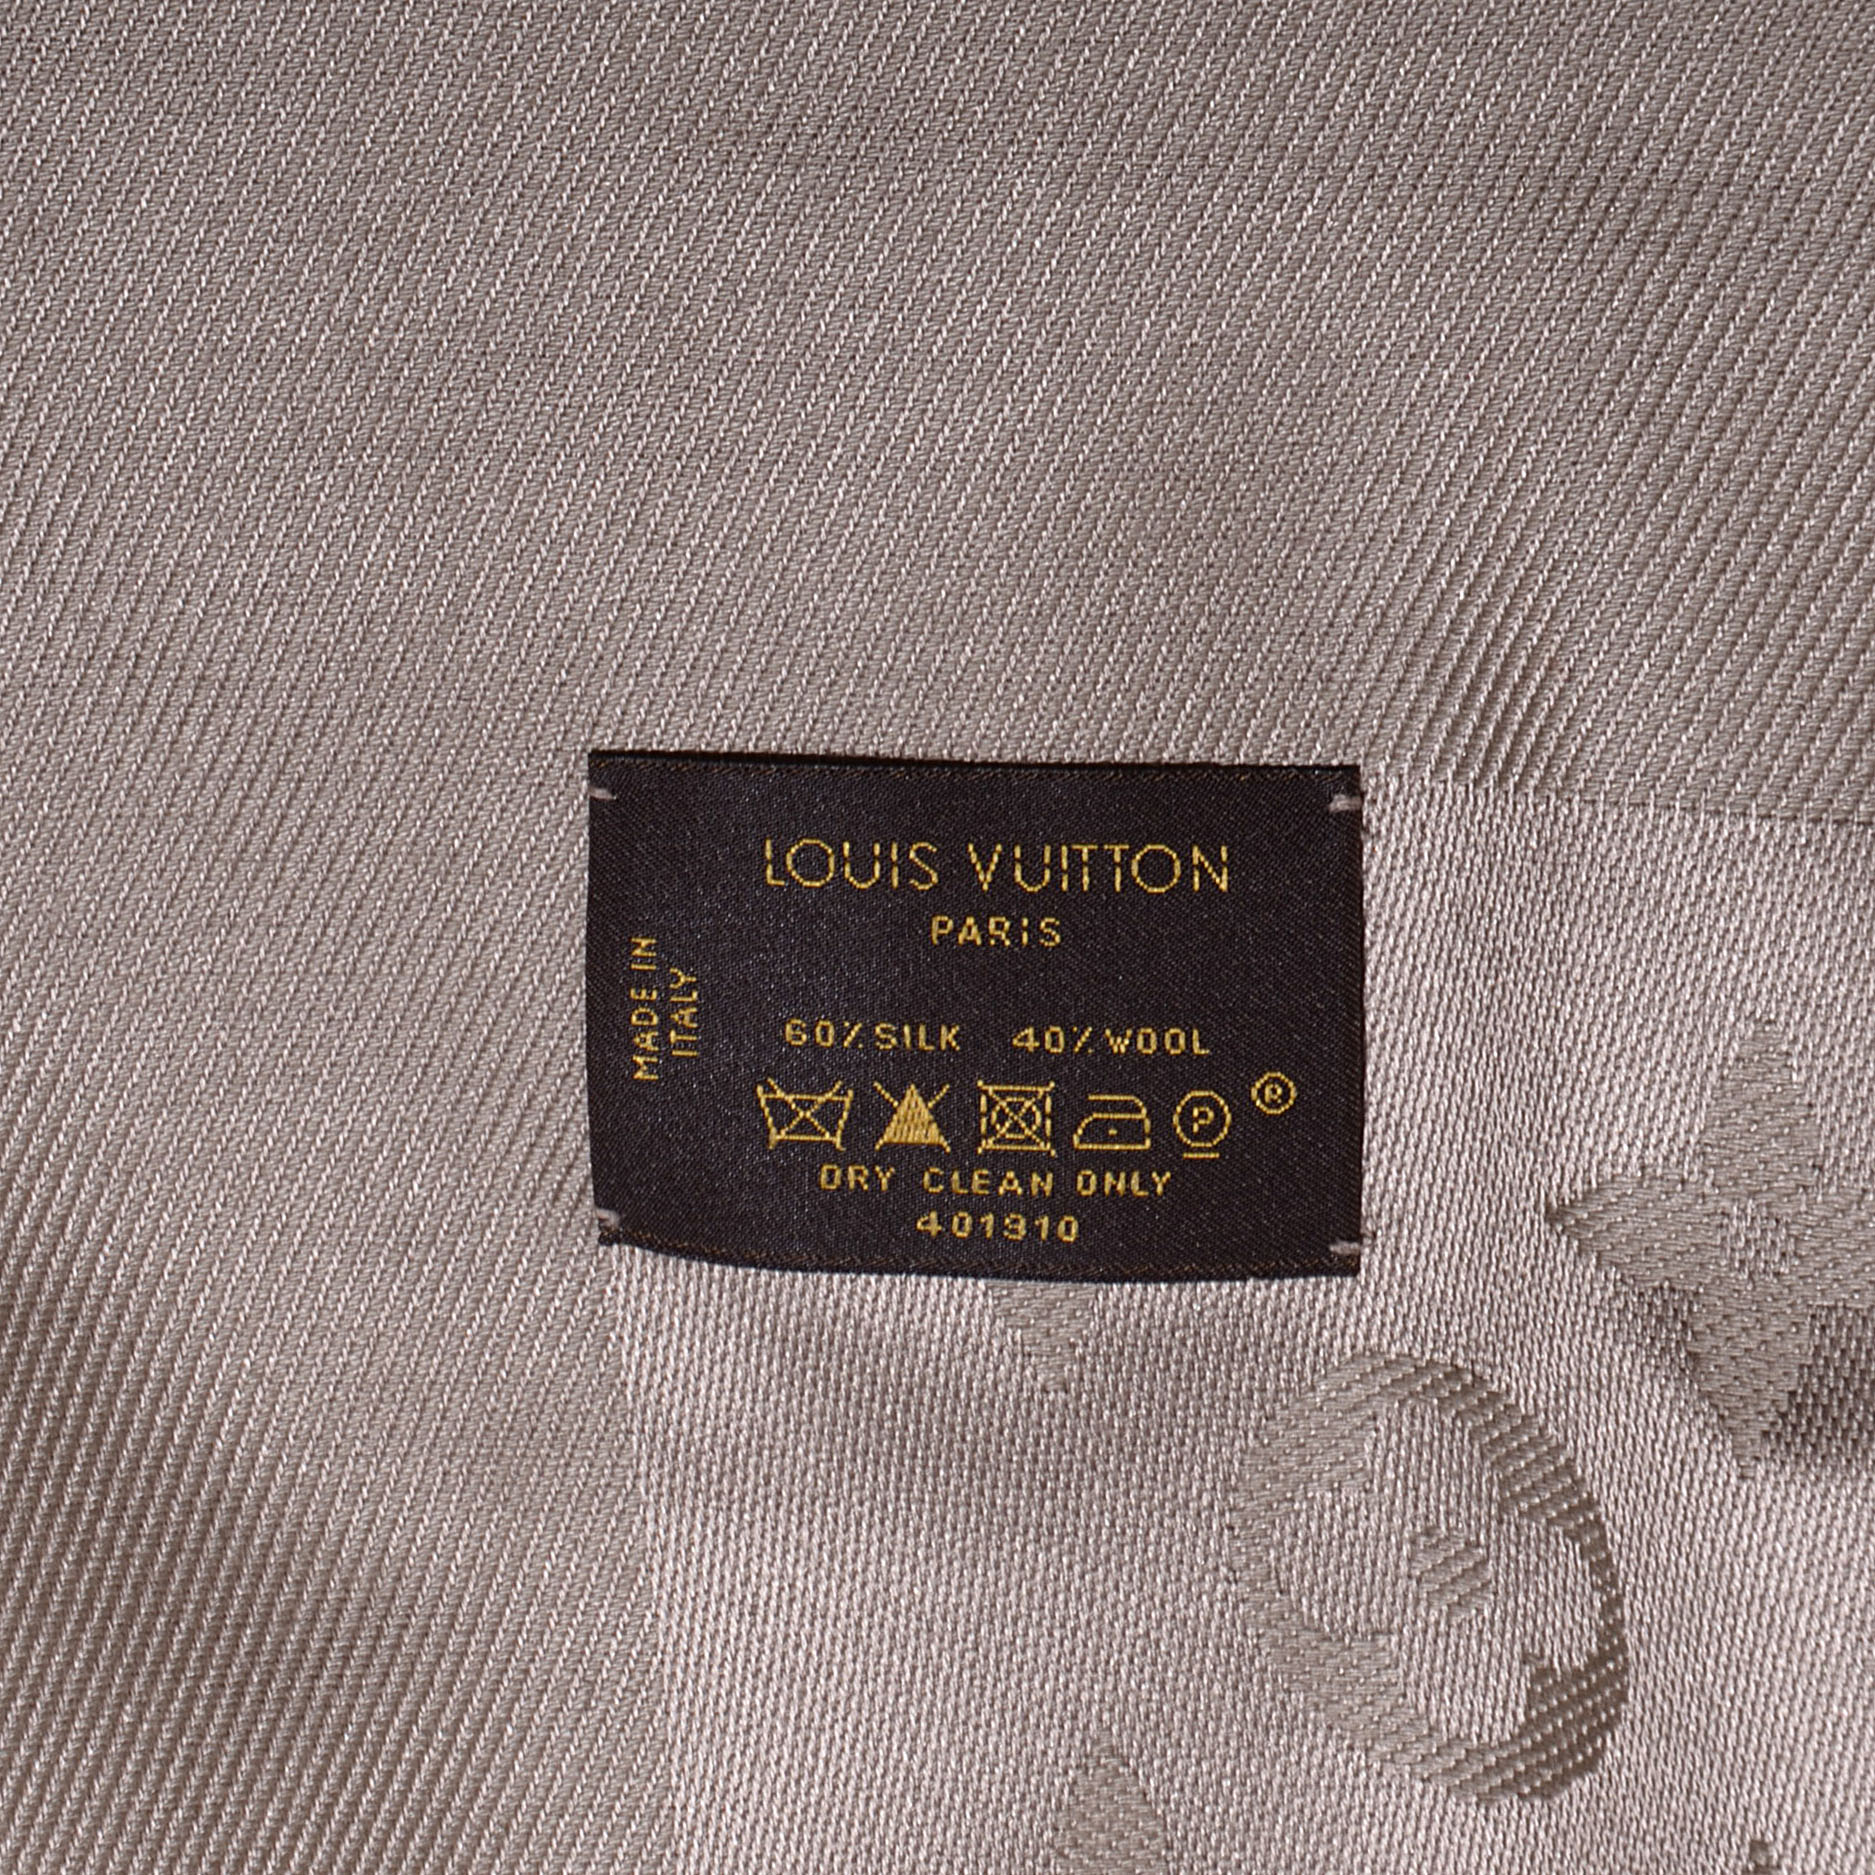 Louis Vuitton Parisjumbo Scarfsilk 60 40 Wool Brown 